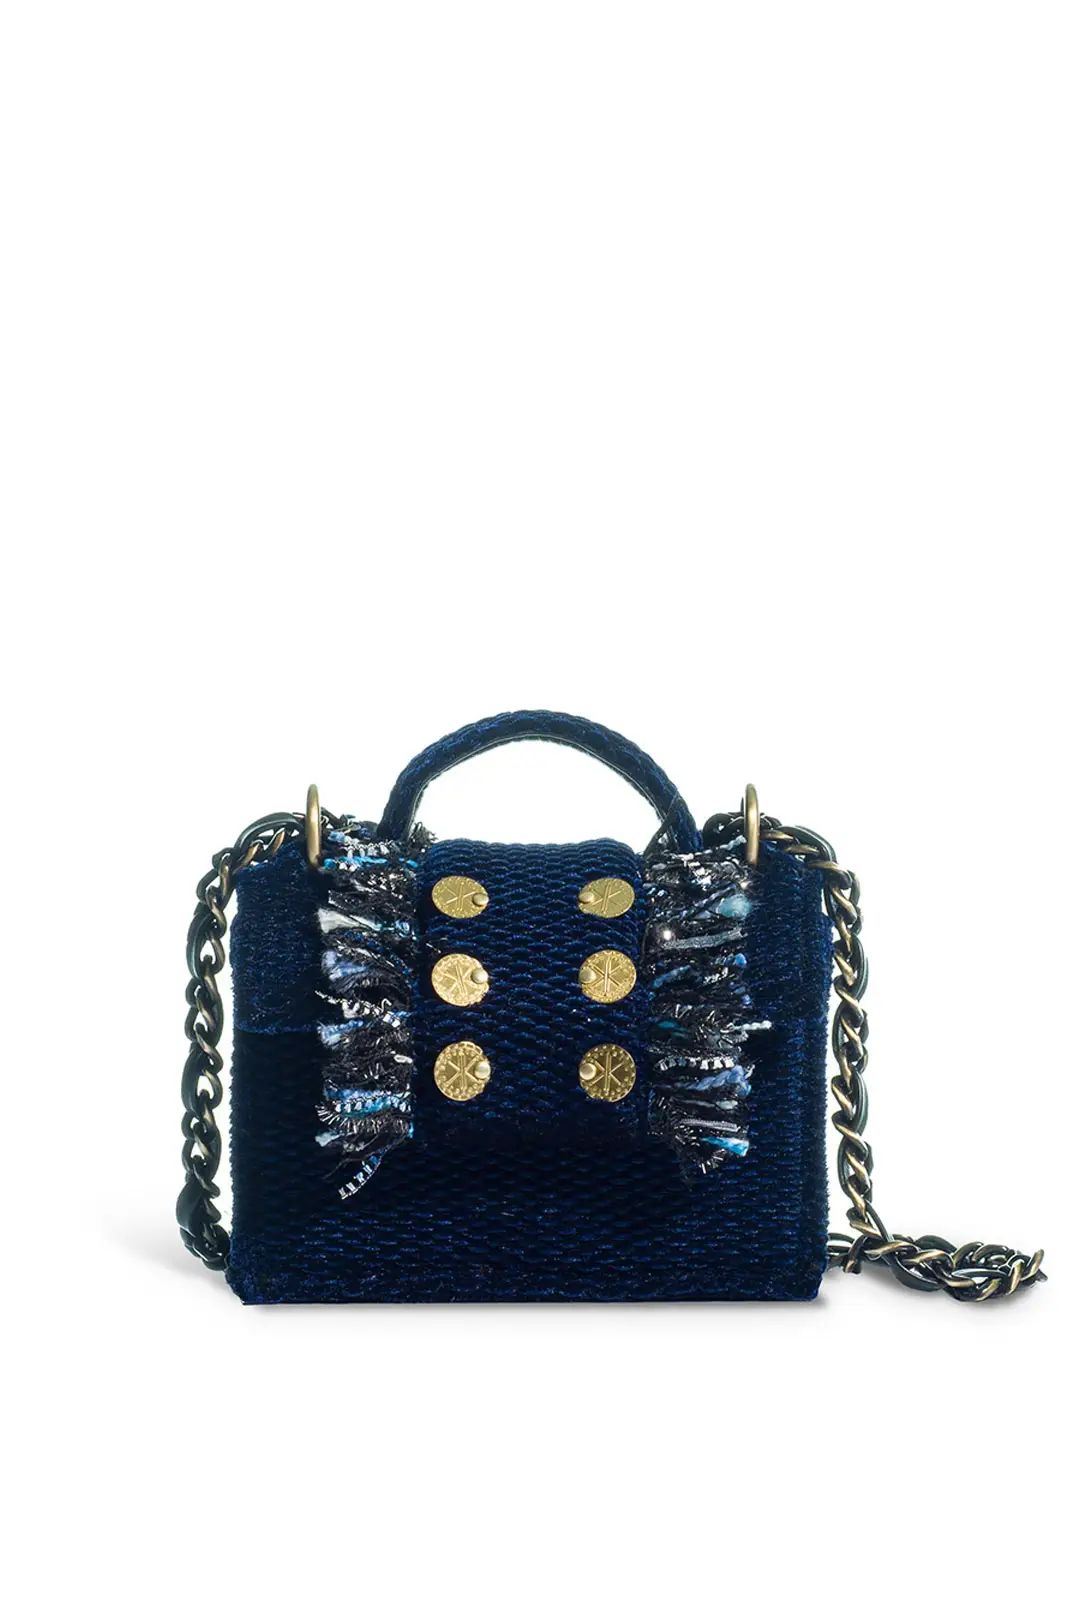 Kooreloo Blue Velvet Petite Honeycomb Bag | Rent the Runway